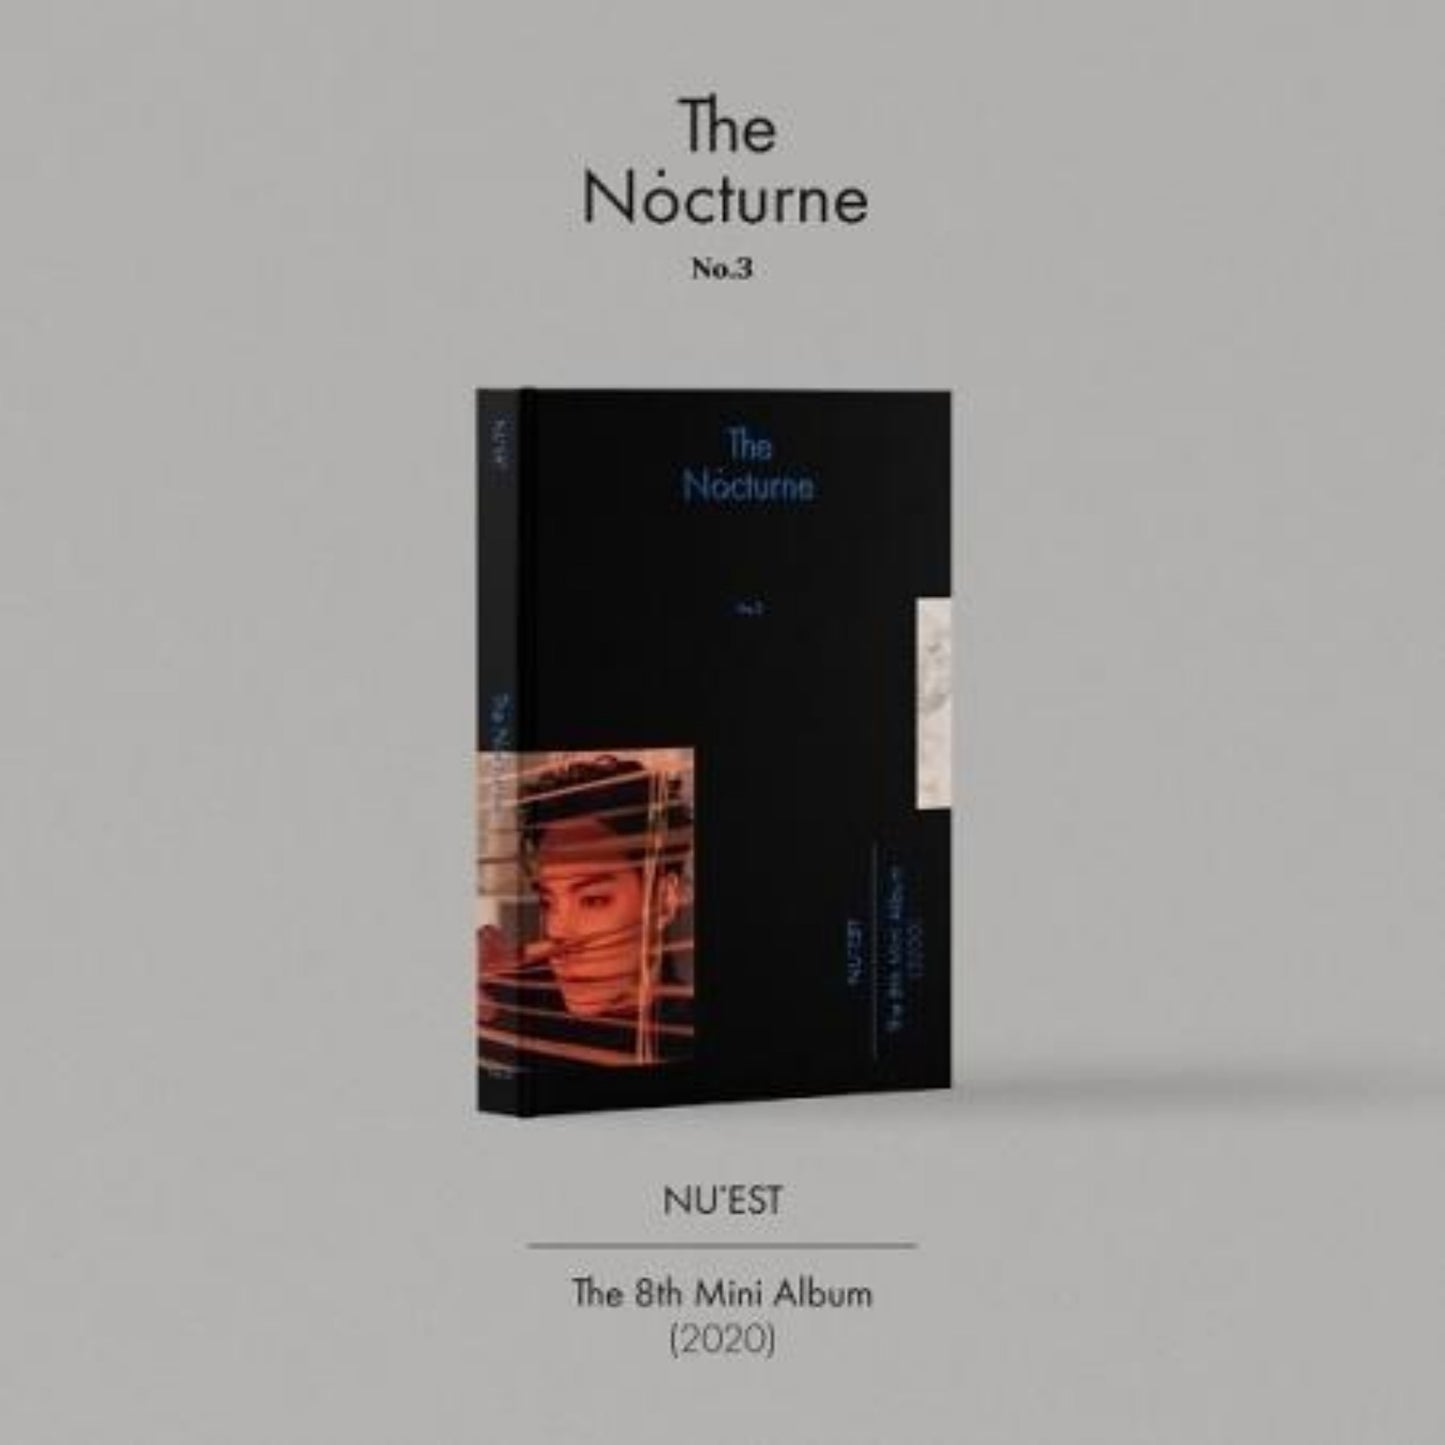 نيست - الالبوم الثامن 3 | (ONE) NU'EST  - 8th Mini Album : The Nocturne [Ver. no.3]